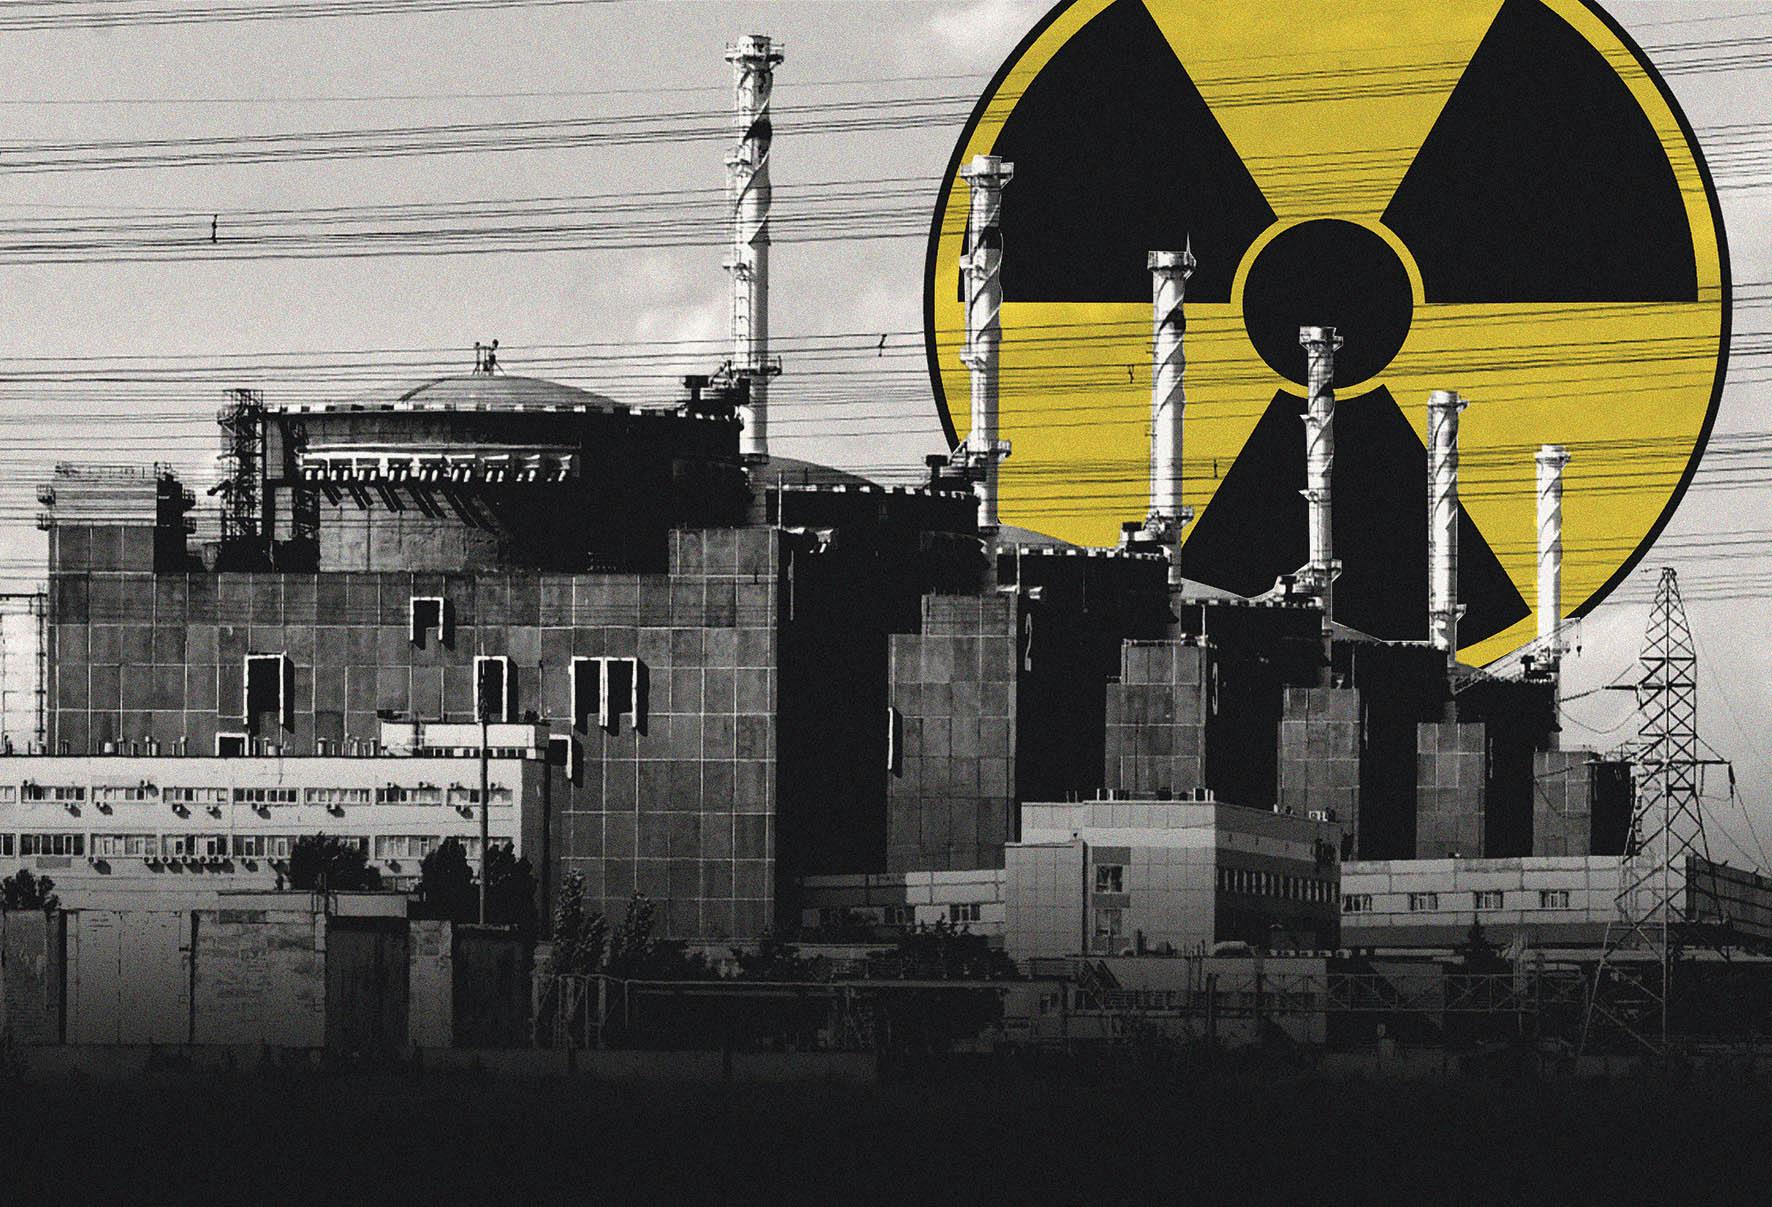 Ukraine invasion shows danger of nuclear power